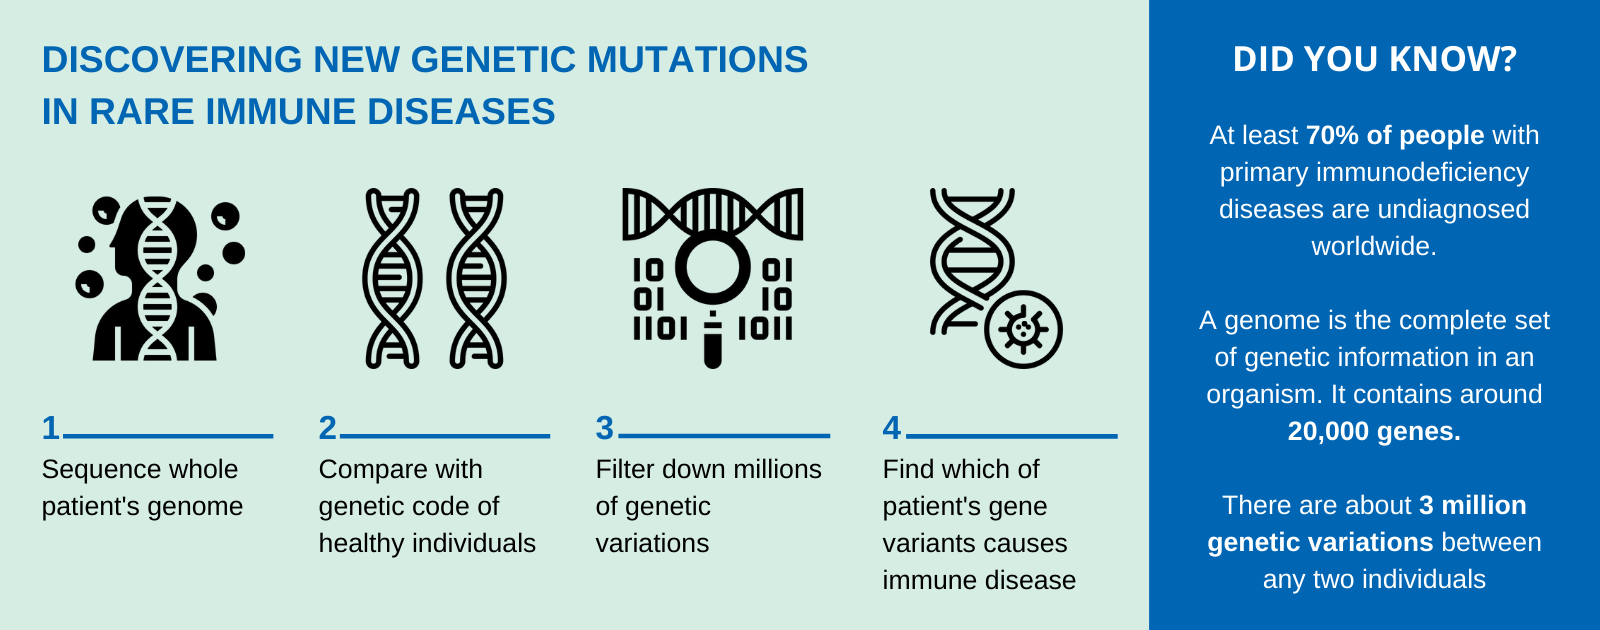 Discovering new genetic mutations in rare immune diseases